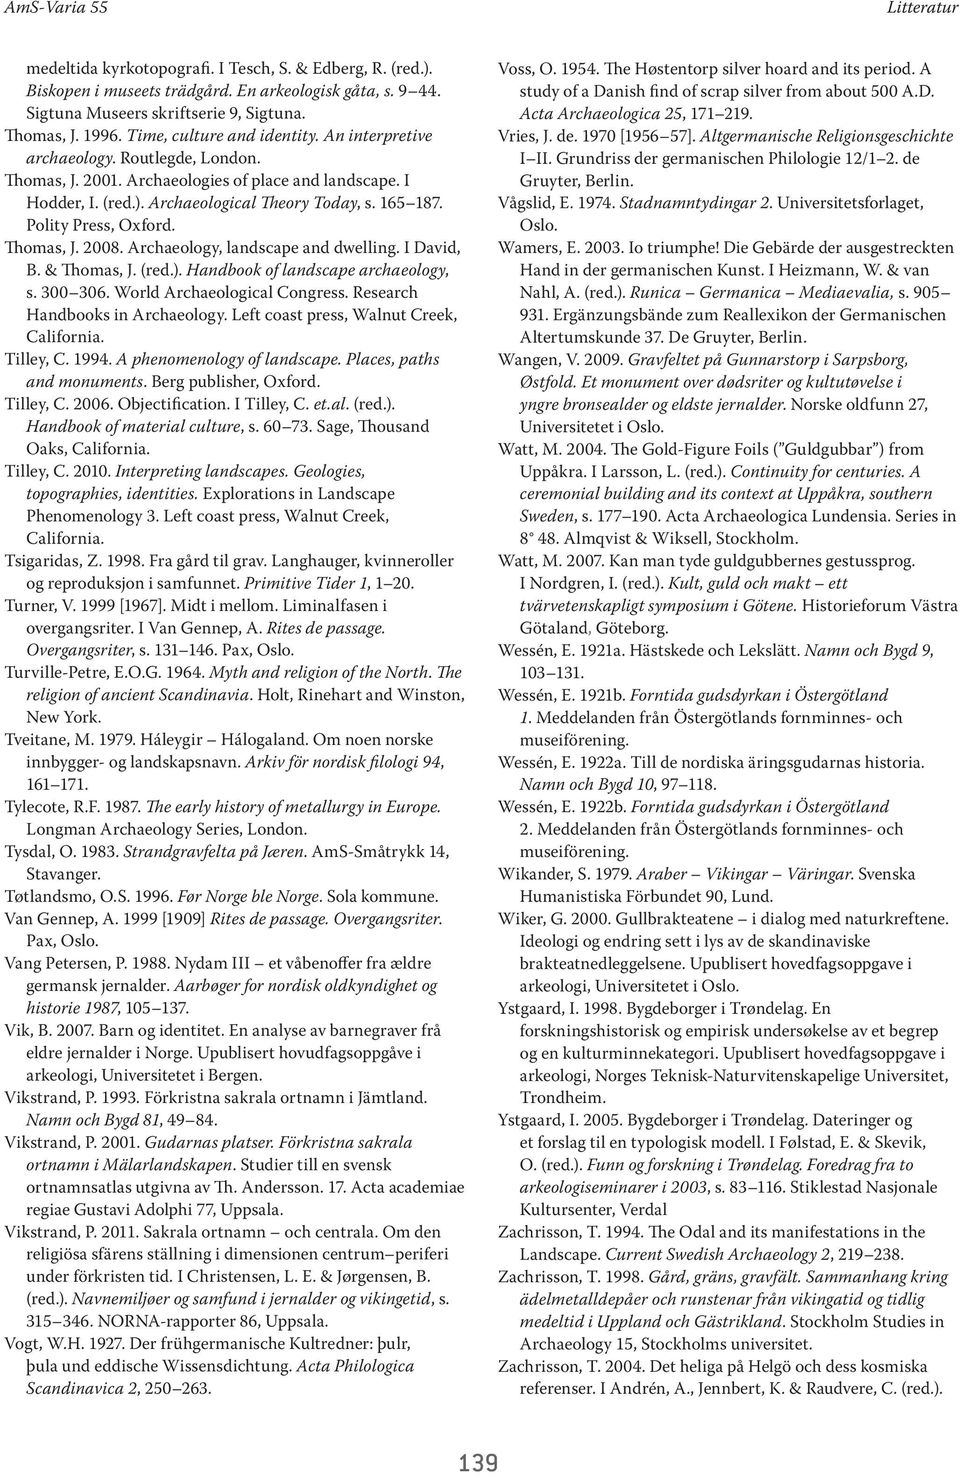 Polity Press, Oxford. Thomas, J. 2008. Archaeology, landscape and dwelling. I David, B. & Thomas, J. (red.). Handbook of landscape archaeology, s. 300 306. World Archaeological Congress.